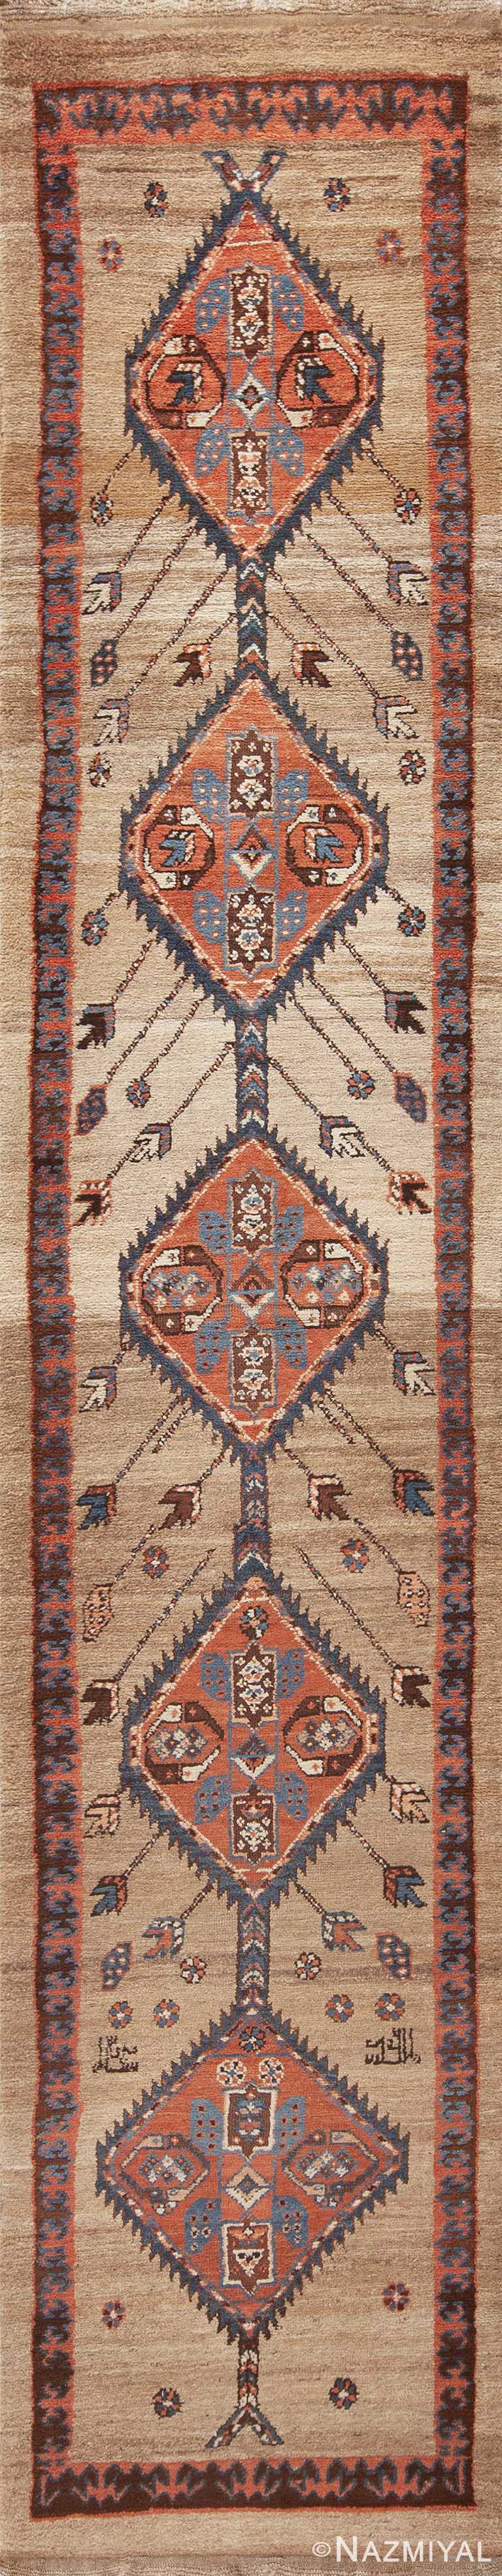 Tribal Antique Camel Hair Persian Bakshaish Hallway Runner Rug 72566 by Nazmiyal Antique Rugs